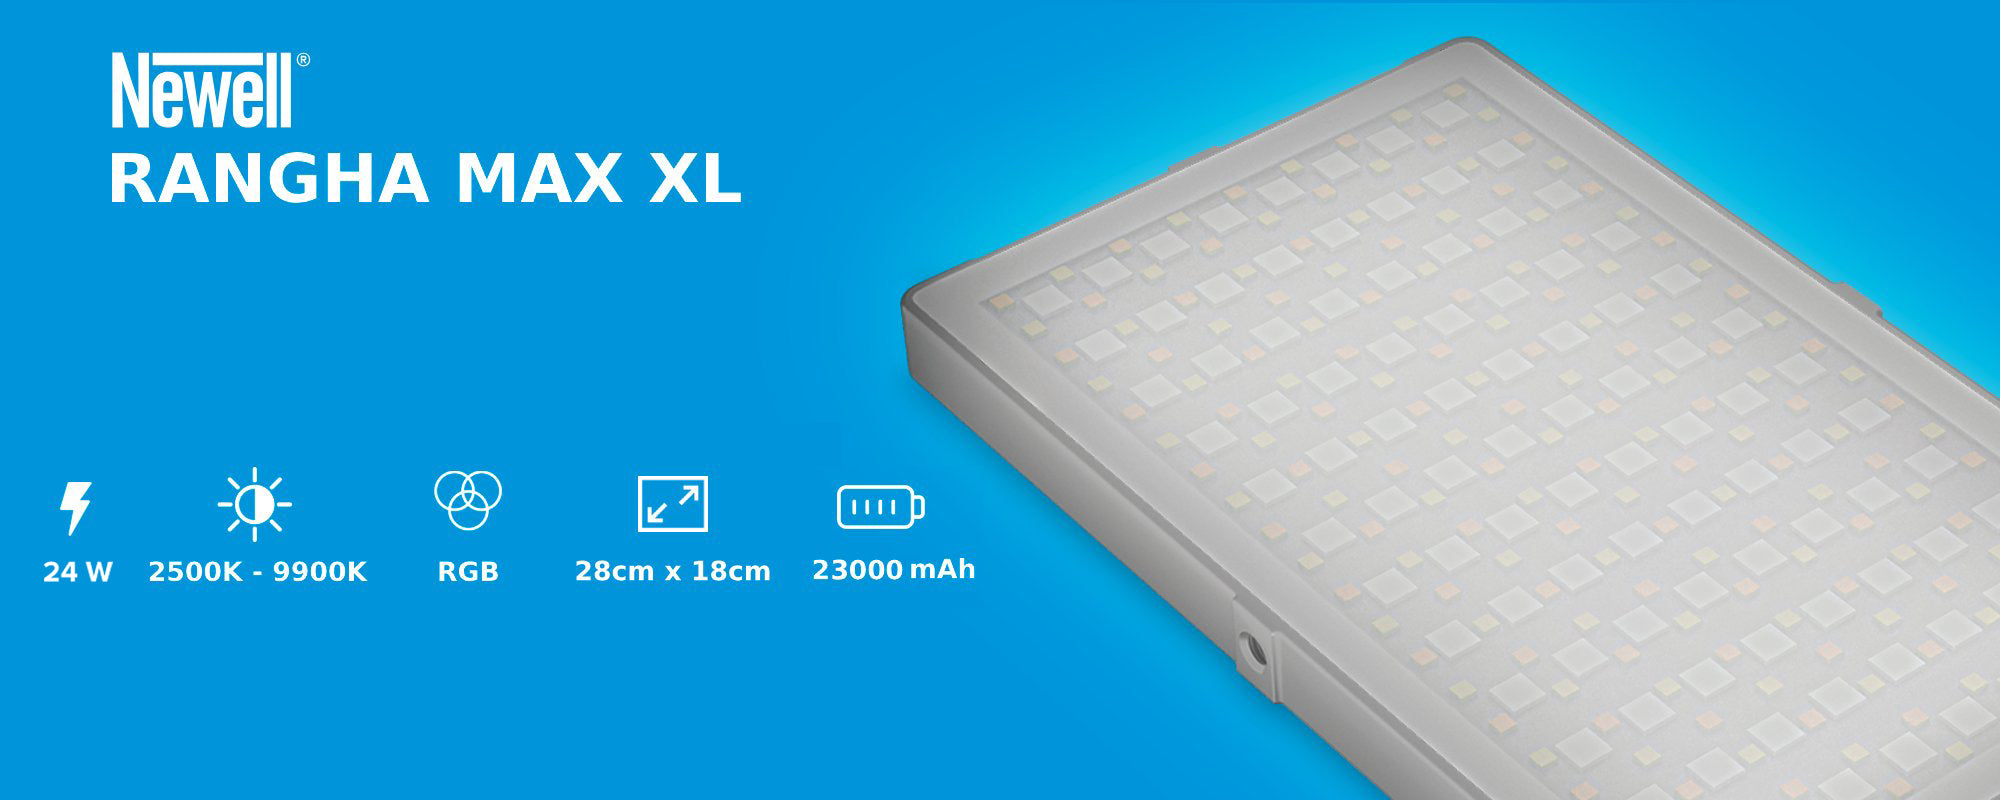 Newell RGB-W Rangha Max XL LED lamp - HUGE LED LIGHT PANEL!